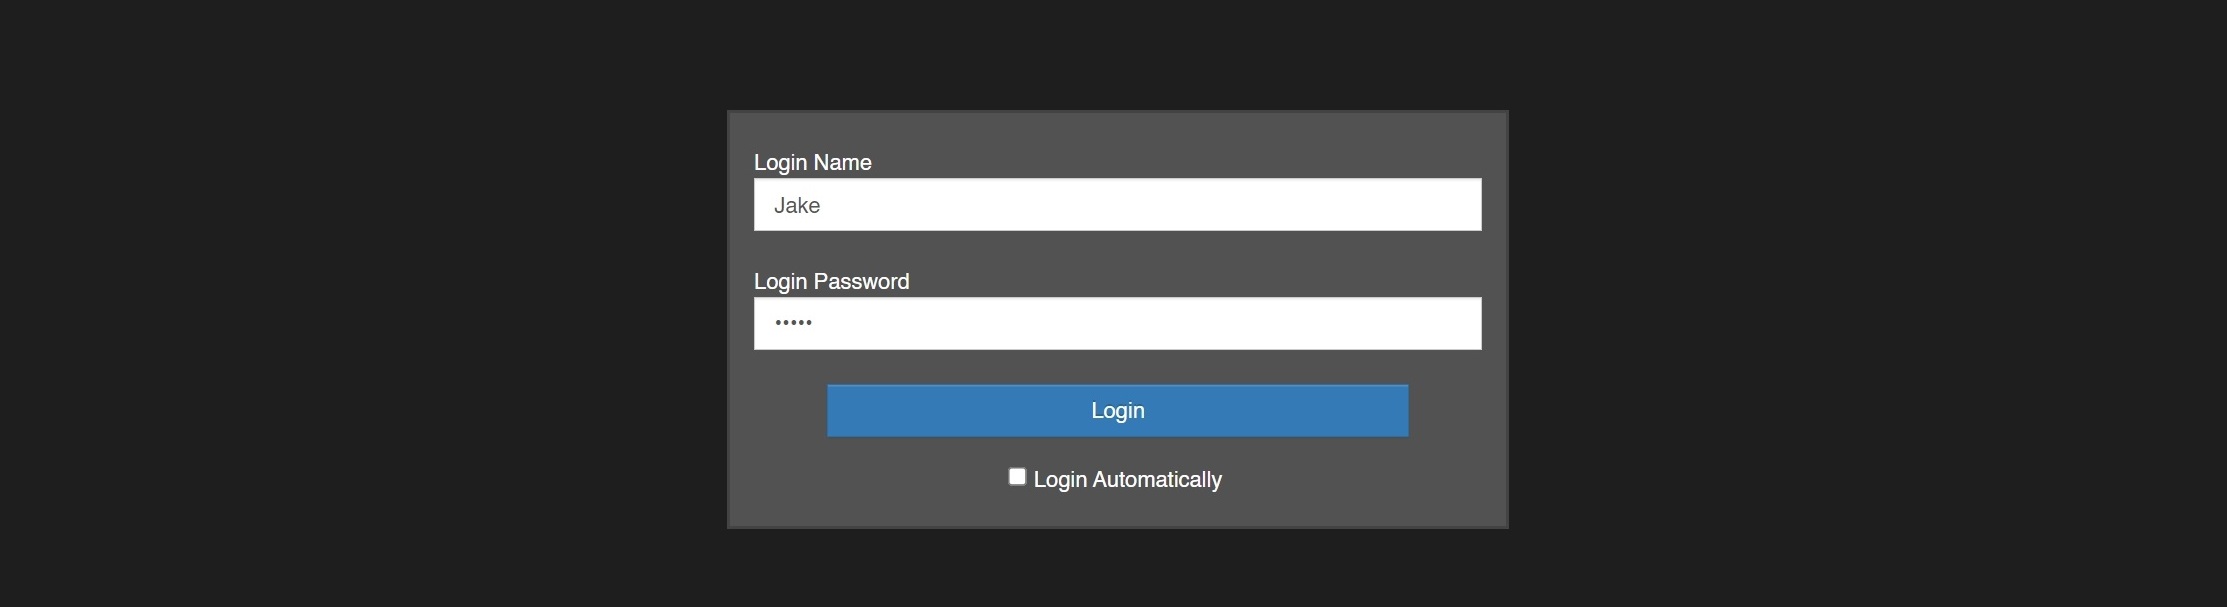 screenshot of vcom webrtc control panel login menu